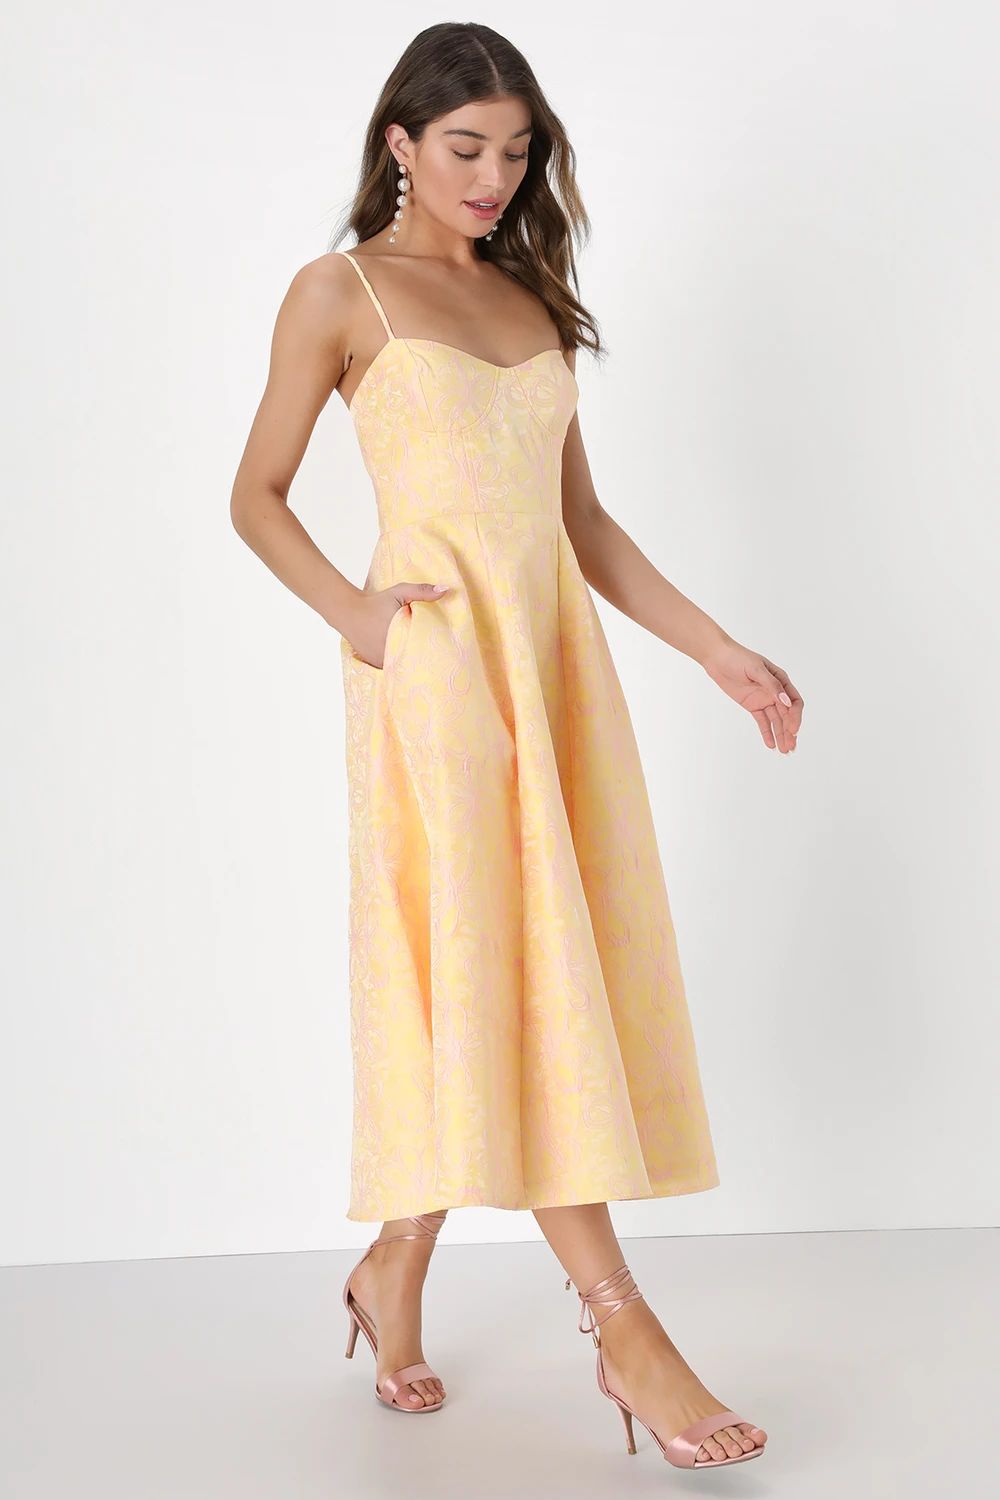 Meet for Tea Yellow Jacquard Bustier Midi Dress With Pockets | Lulus